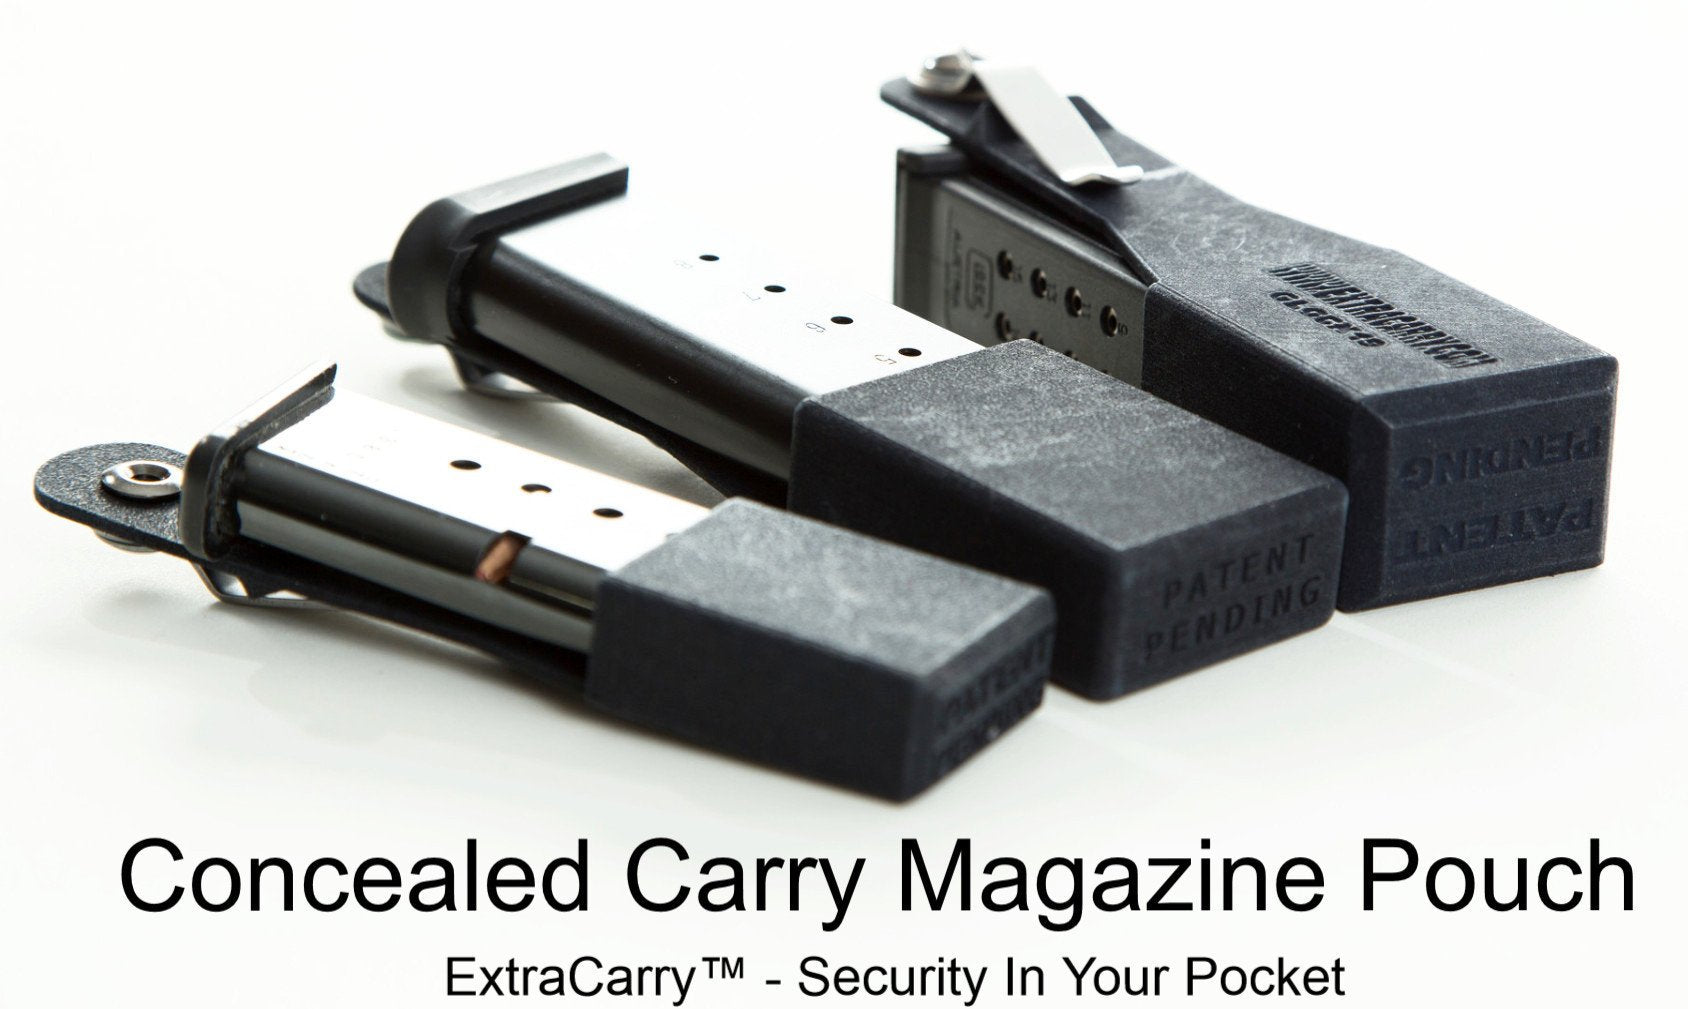 glock 30s pocket carry